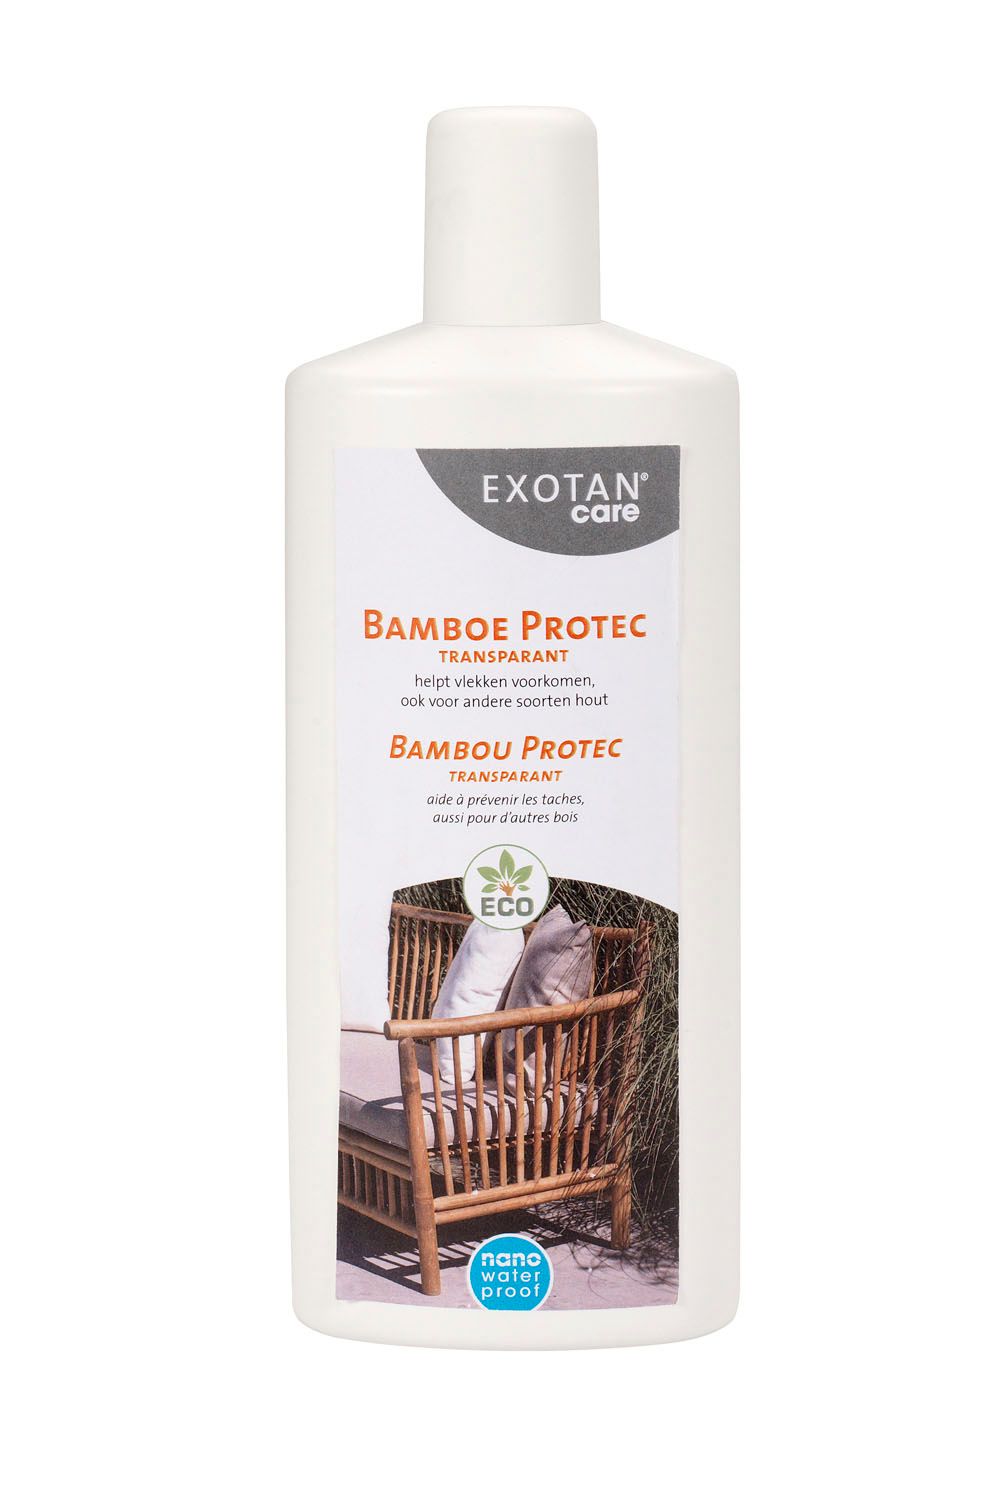 Exotan Care Bamboo protector transparant